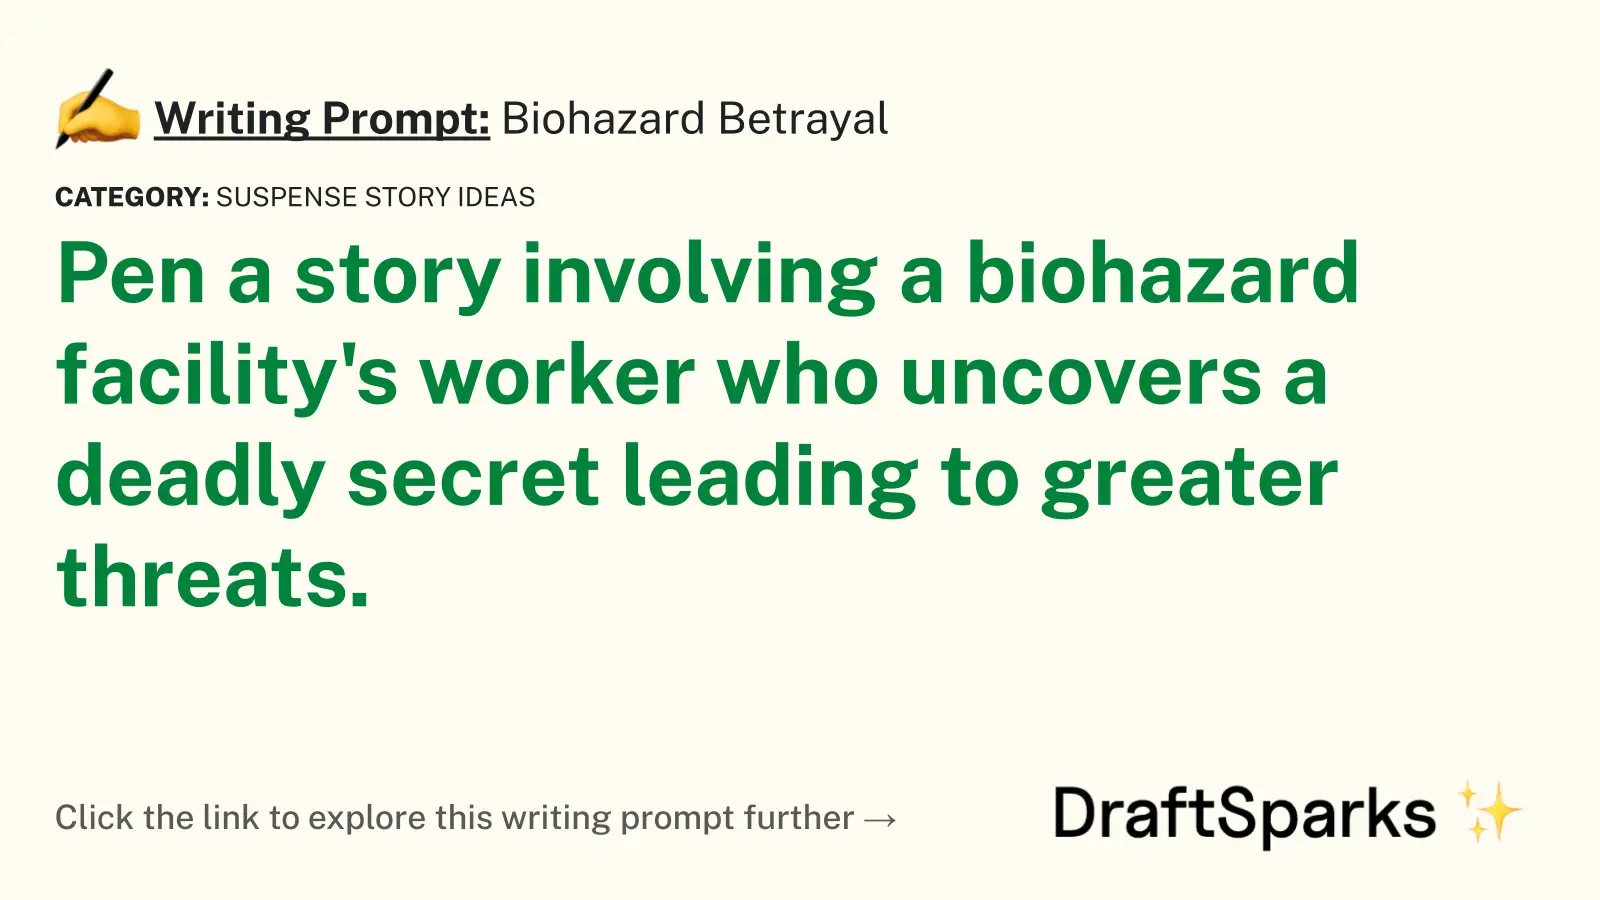 Biohazard Betrayal